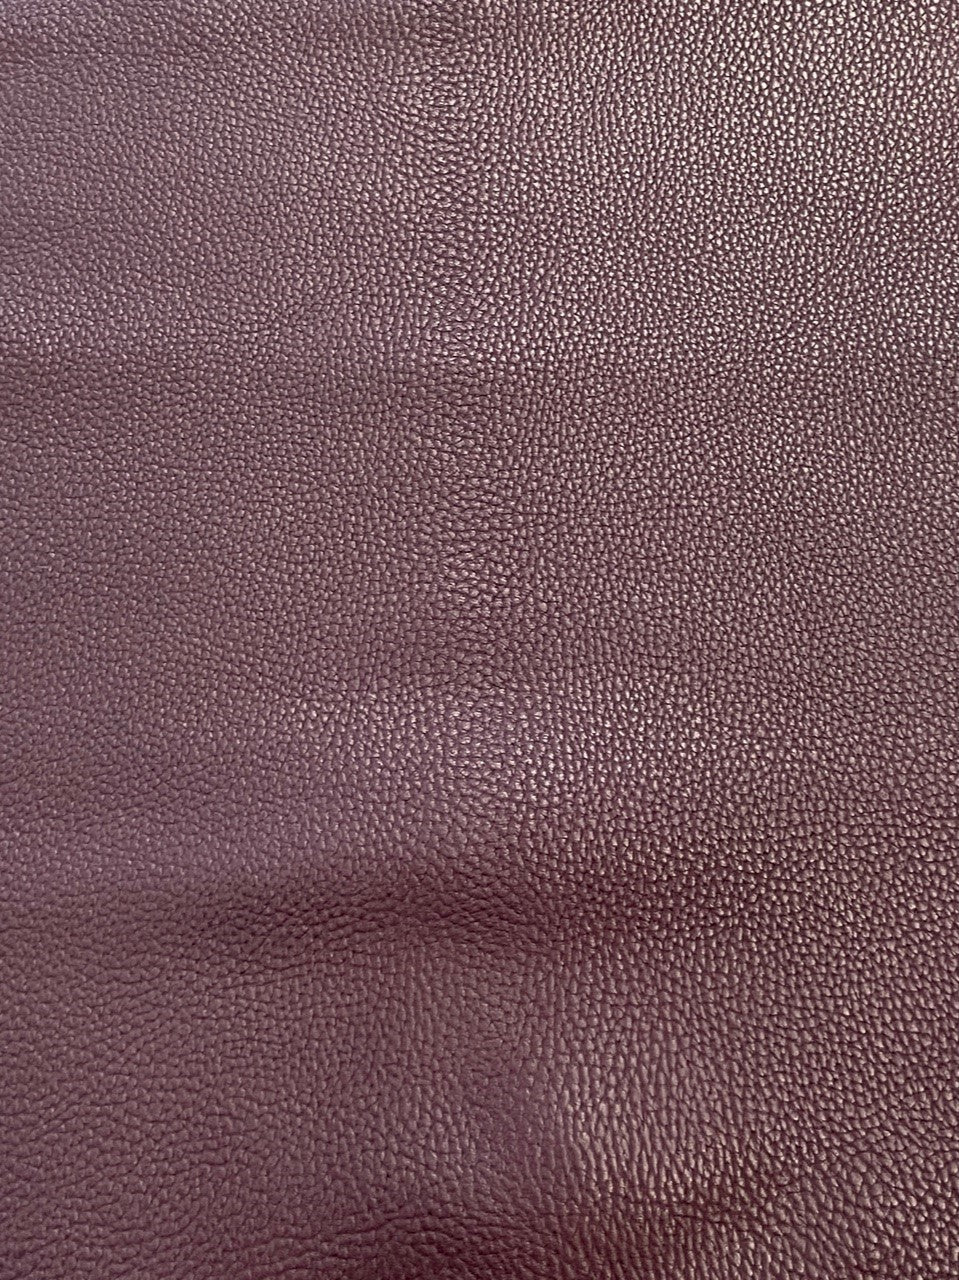 Purple Pebbled Calf Skin | 1.2mm | 6 sq.ft | $55 ea.